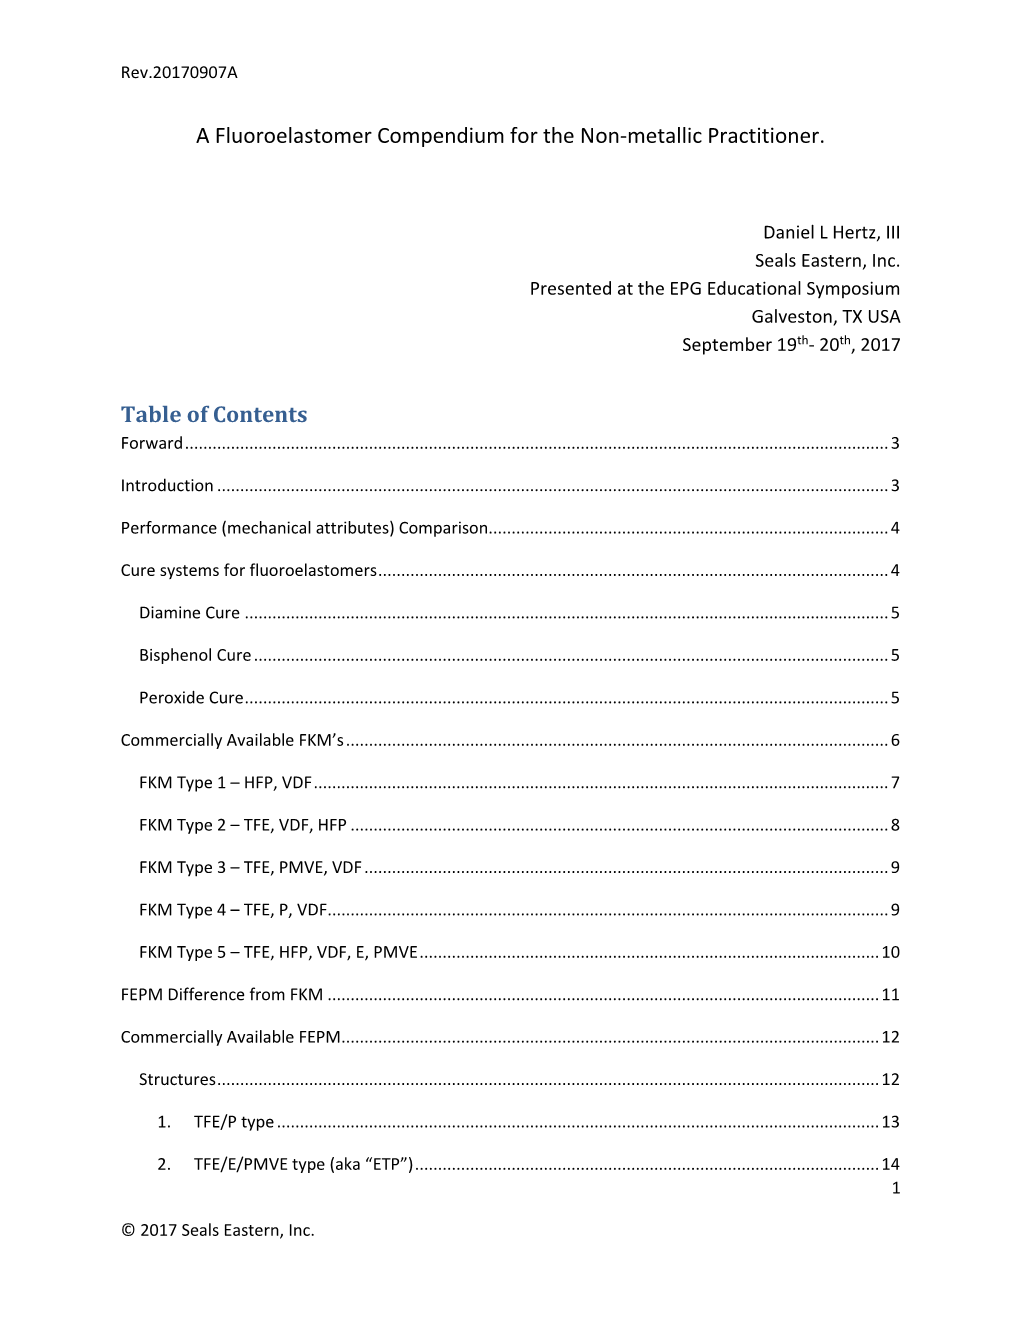 A Fluoroelastomer Compendium for the Non-Metallic Practitioner. Table